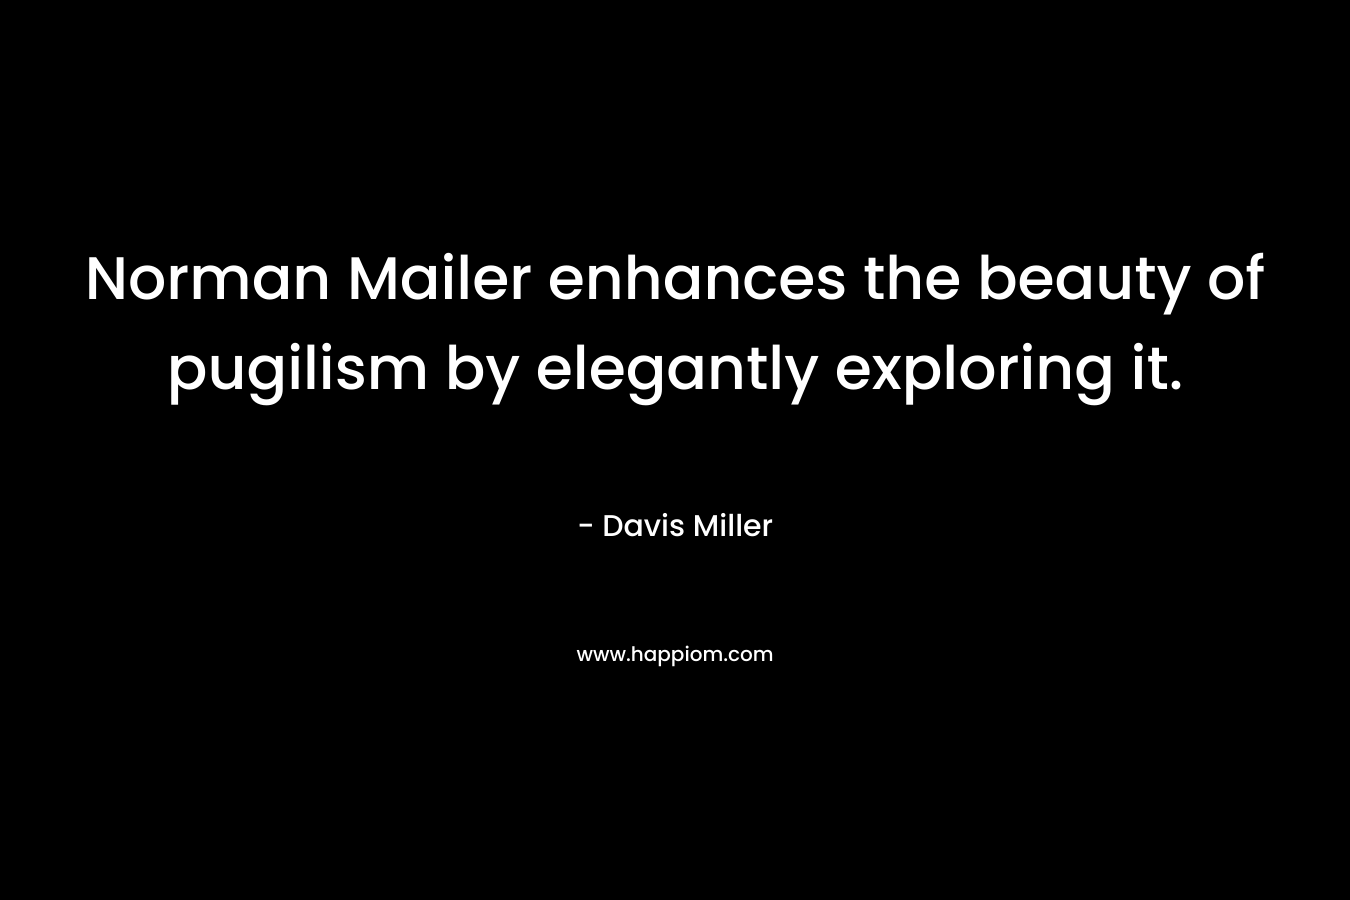 Norman Mailer enhances the beauty of pugilism by elegantly exploring it.